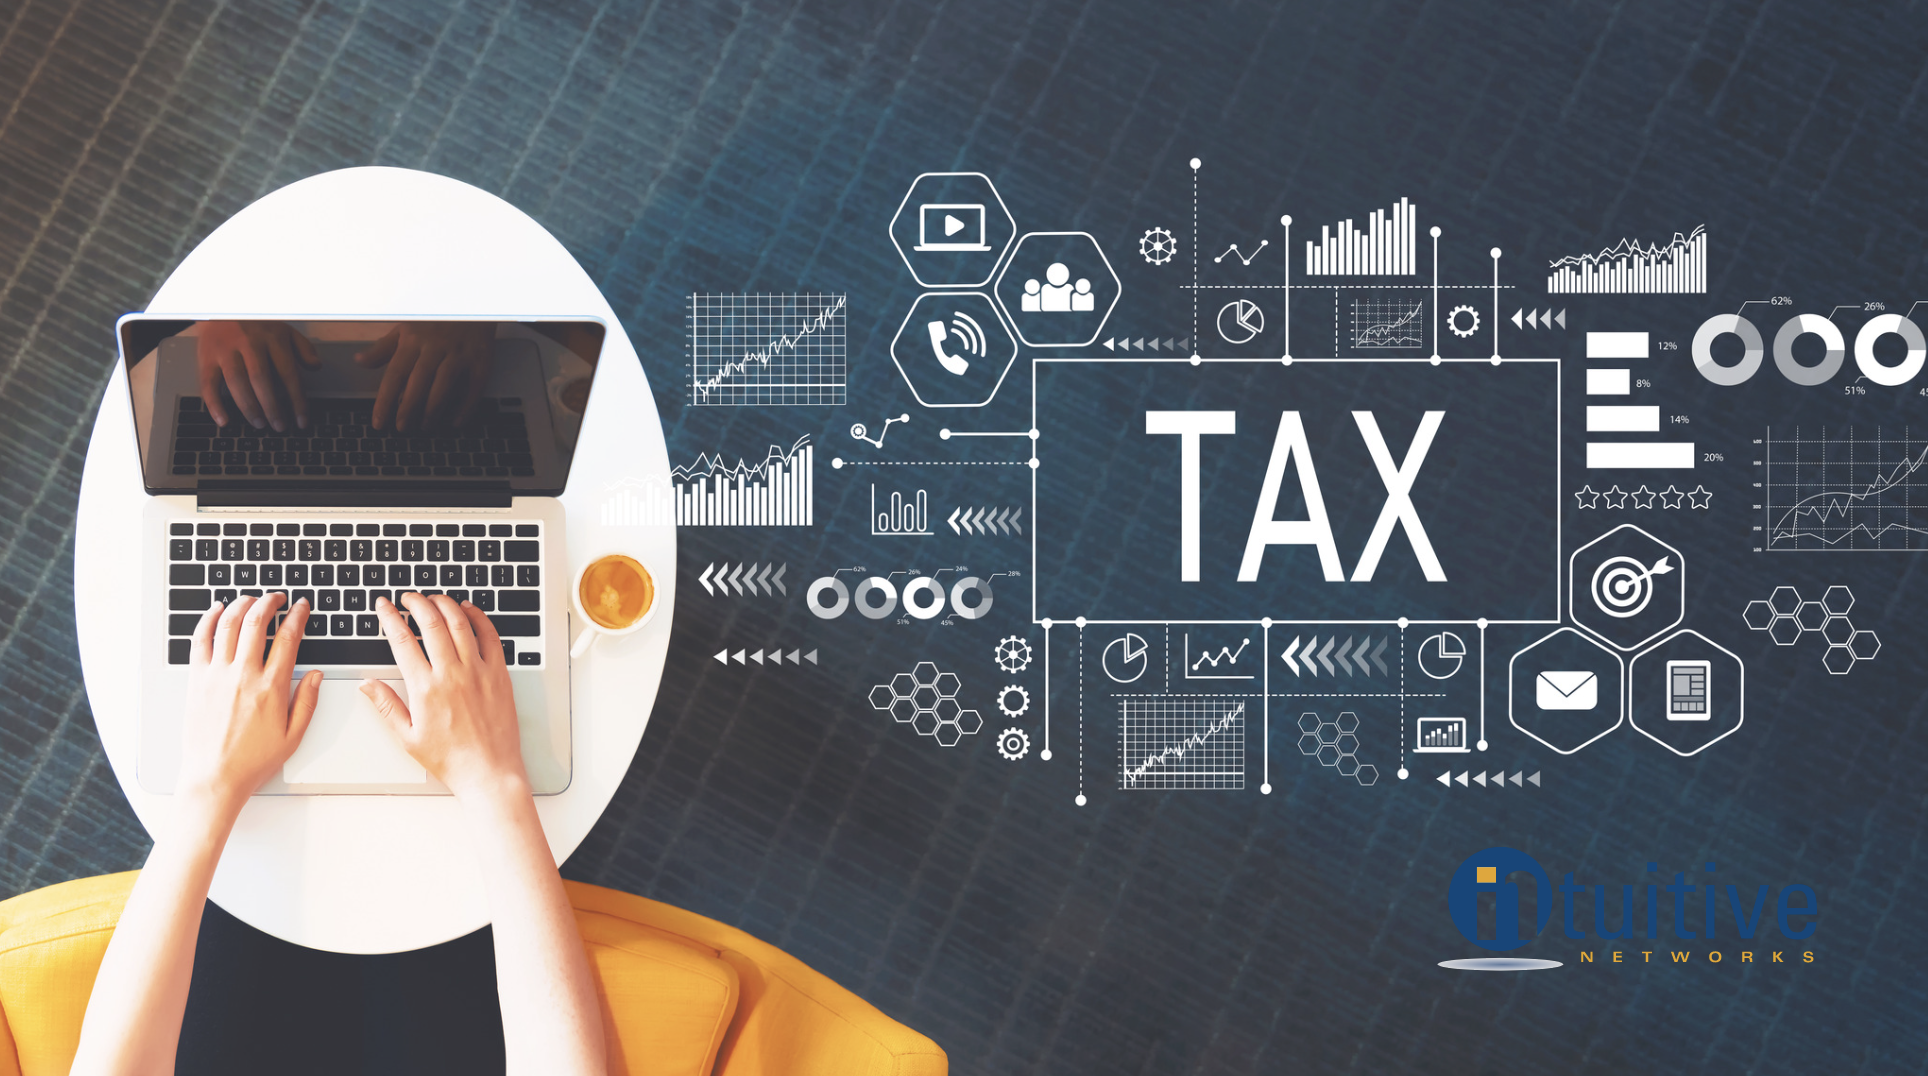 Tax preparer image for pub4557 blog